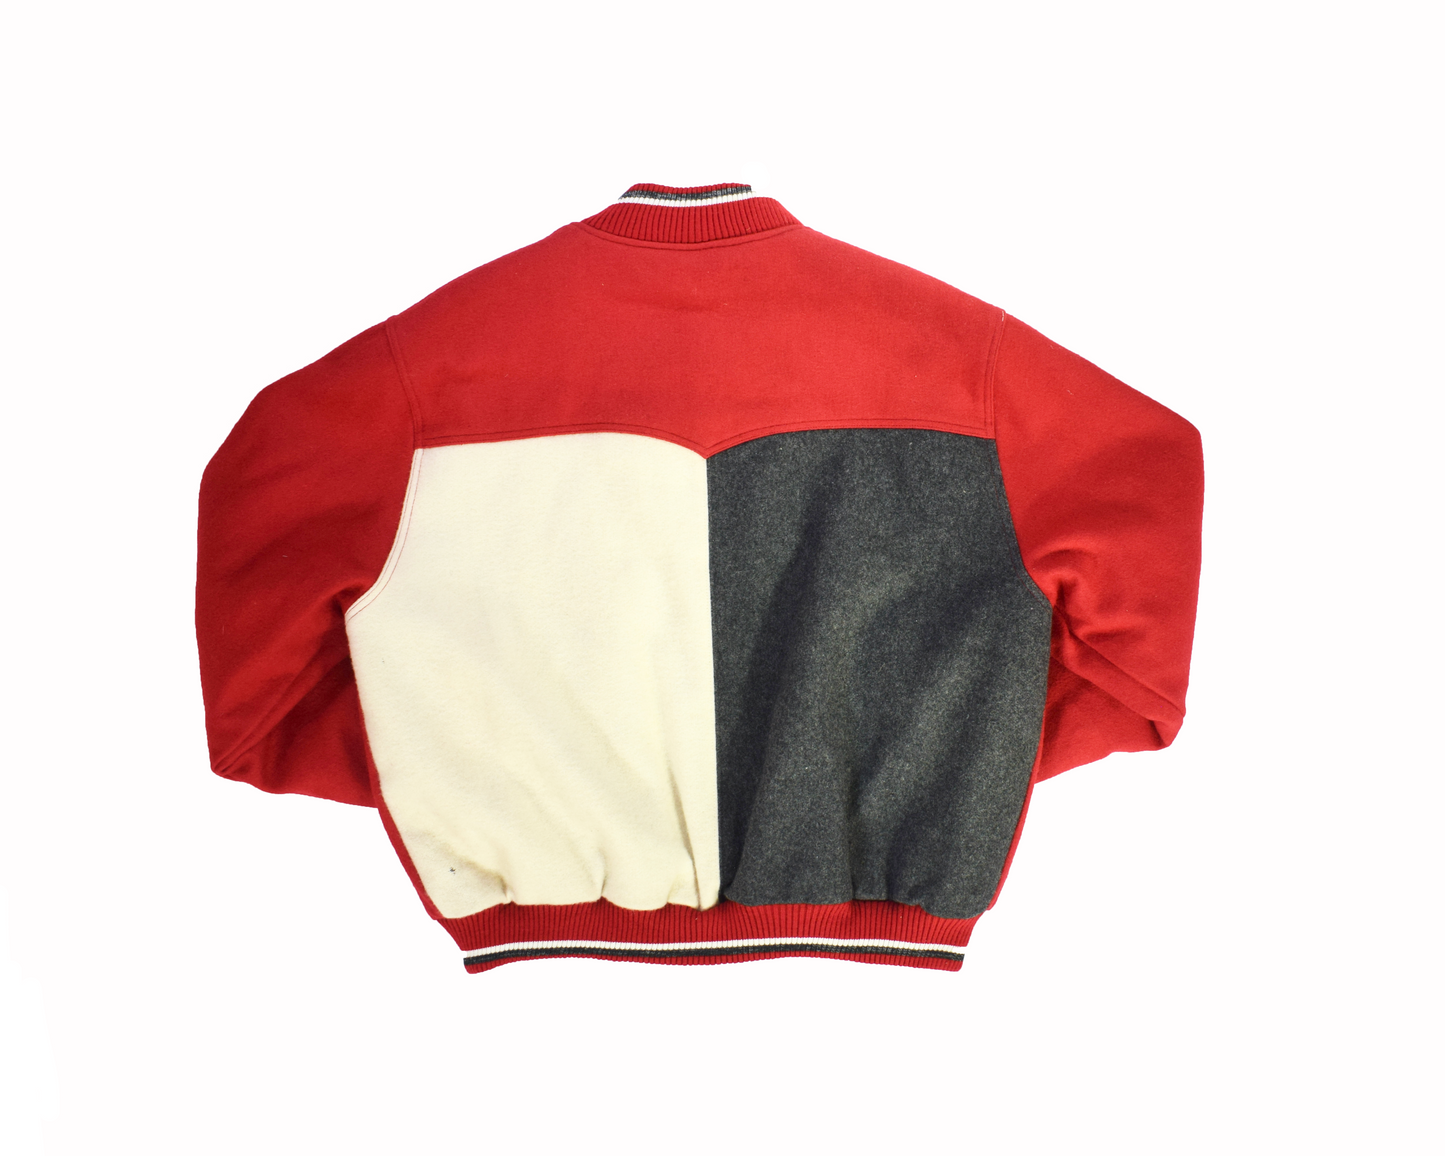 Vintage Midwest Garments Co. Workwear Jacket